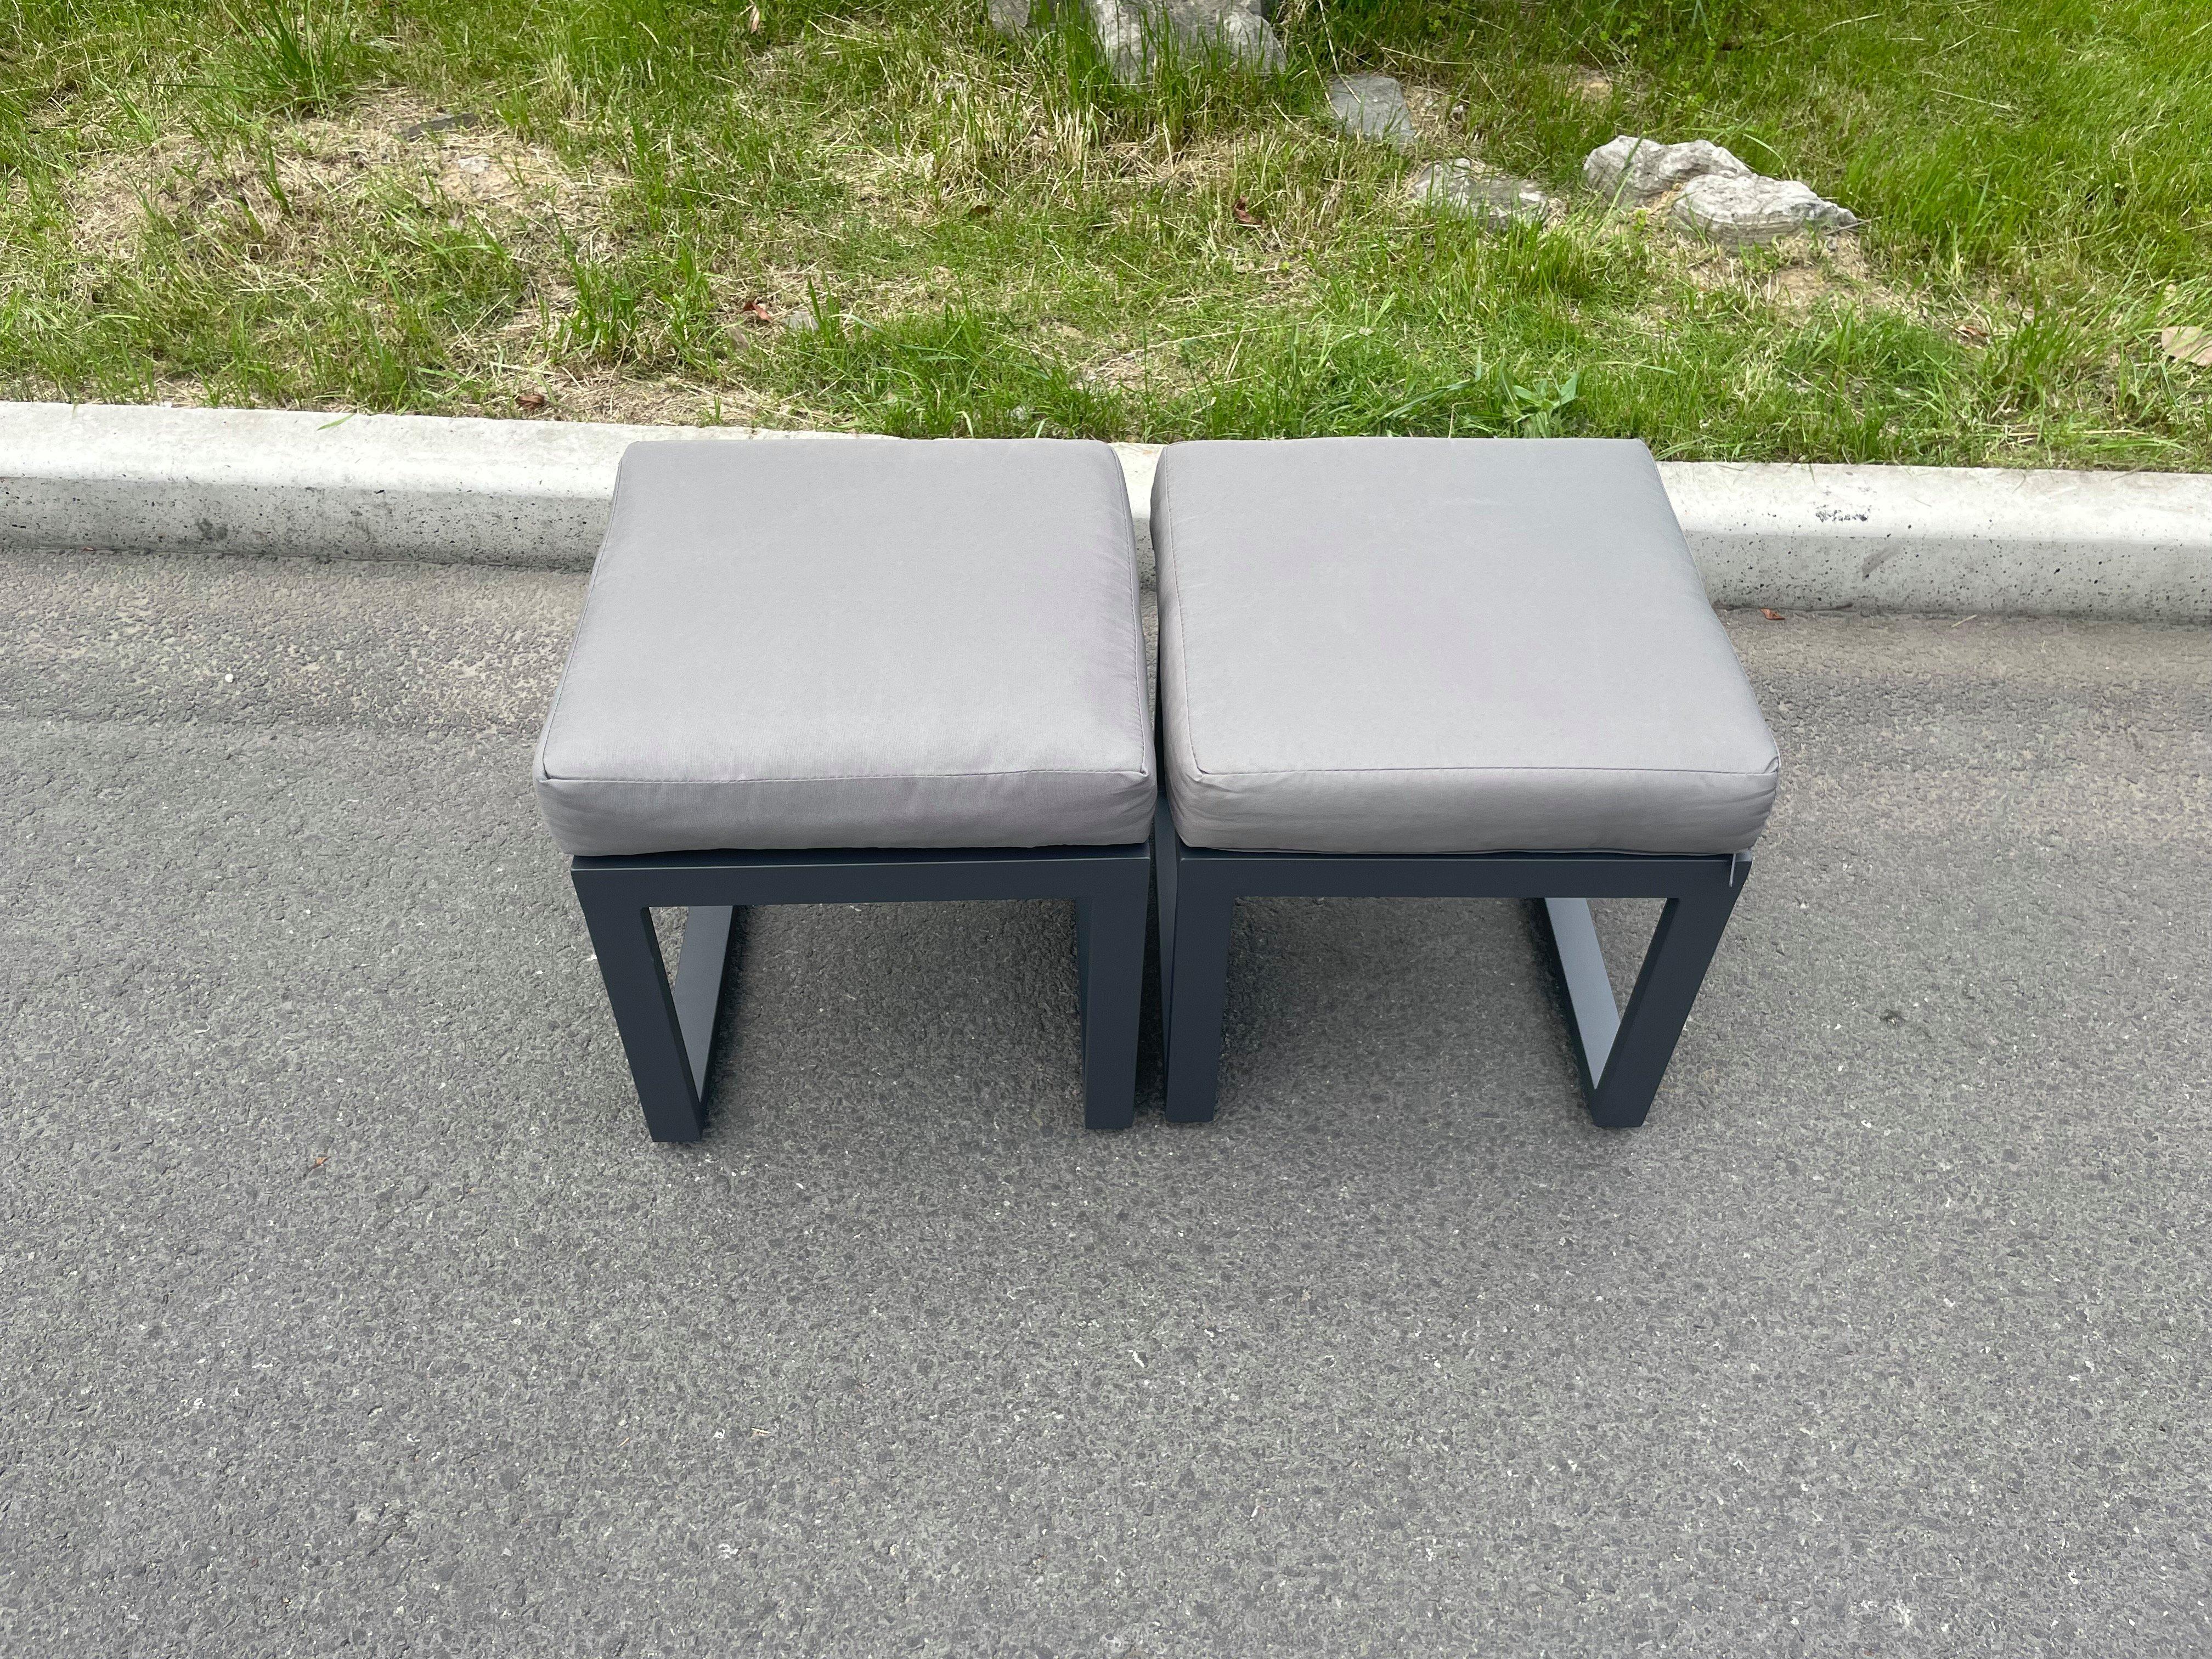 Aluminum 2 PC Small Footstool Outdoor Garden Furniture With Seat Cushion Patio Furniture Dark Grey